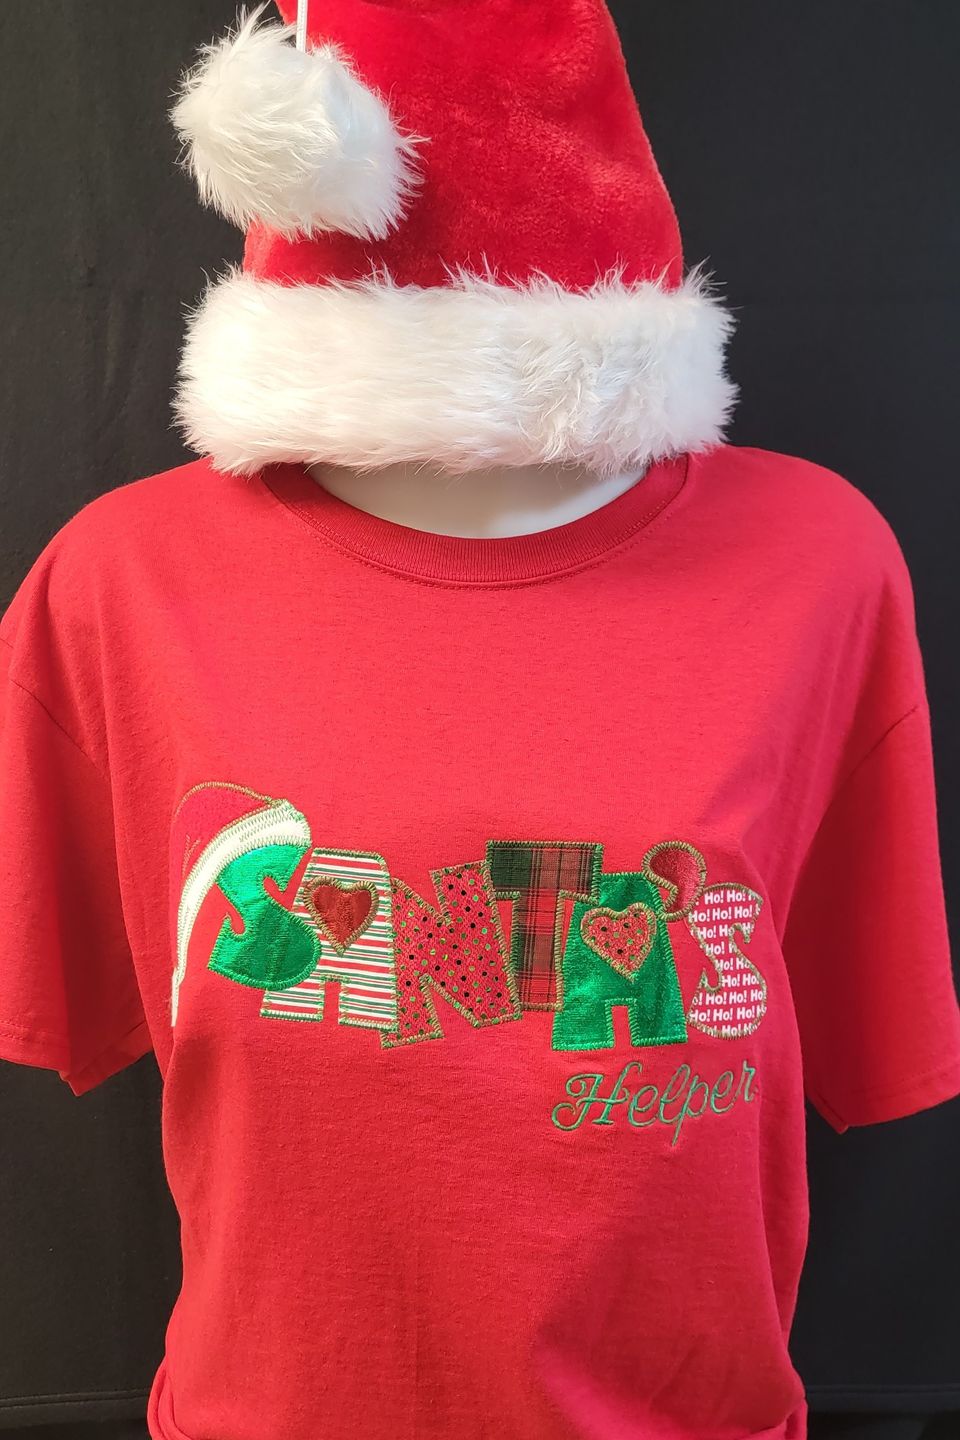 Applique and Embroidery Santa's helper shirt